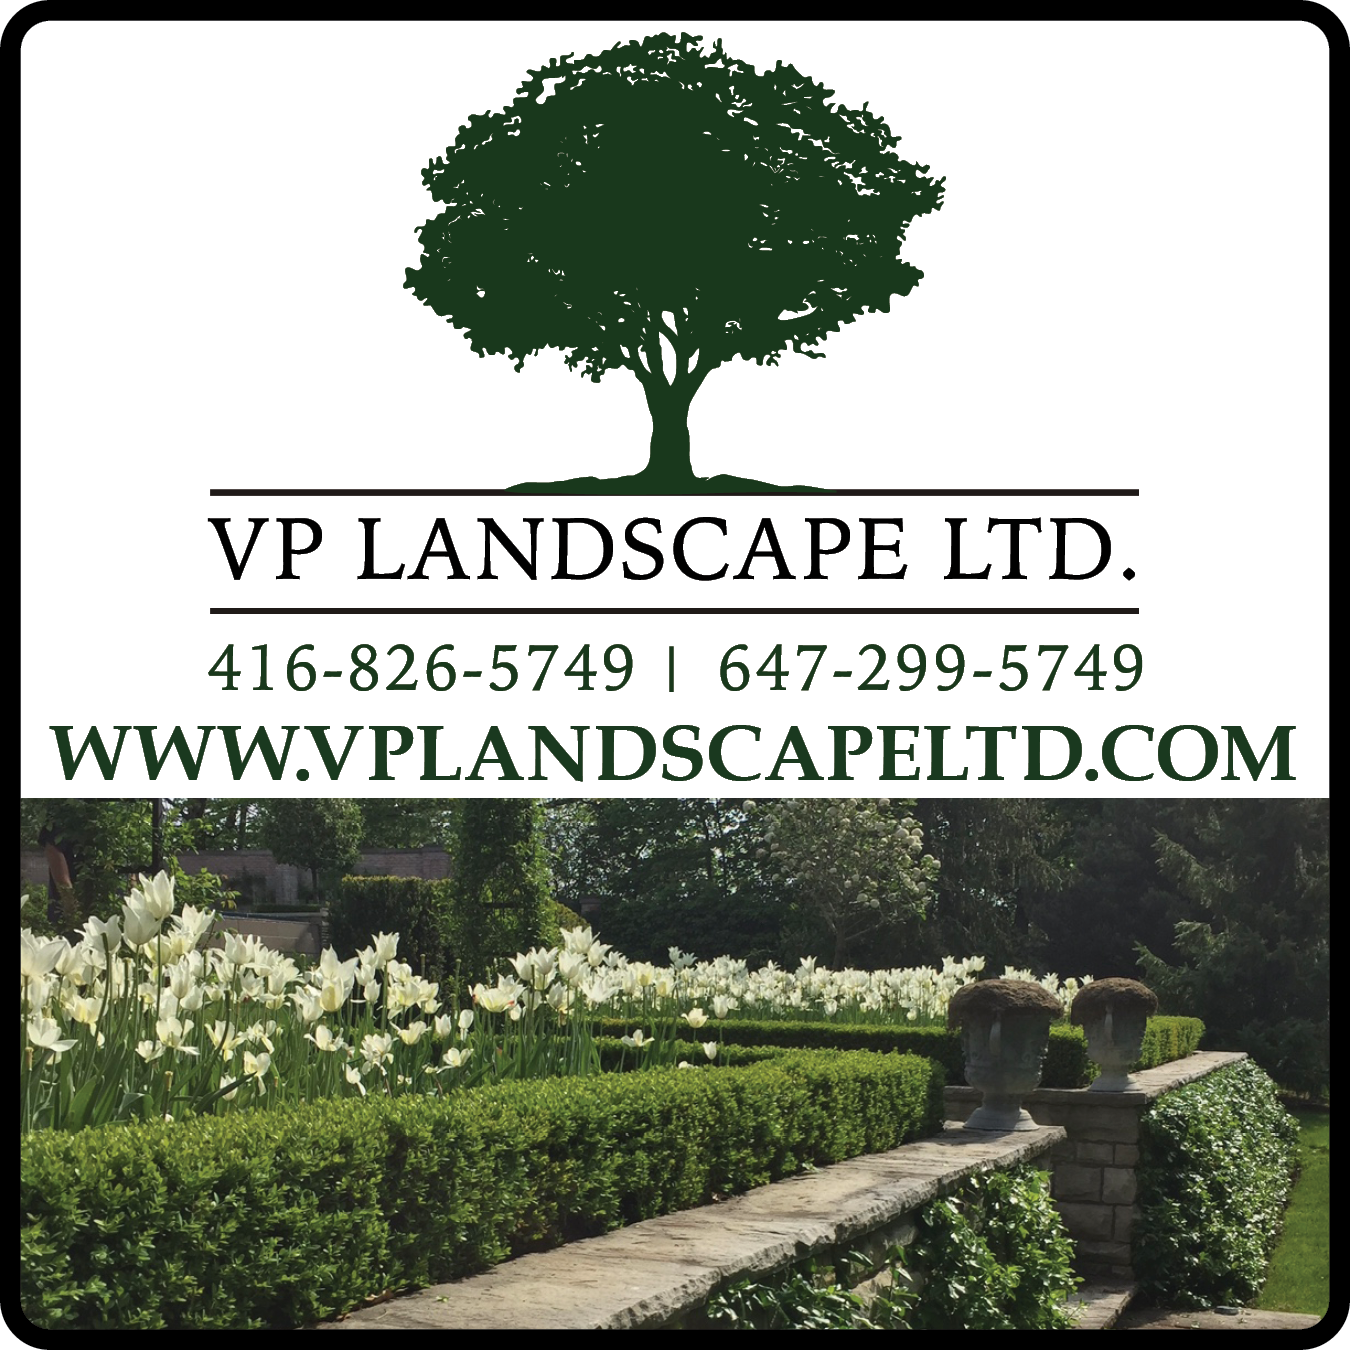 VP Landscape Ltd